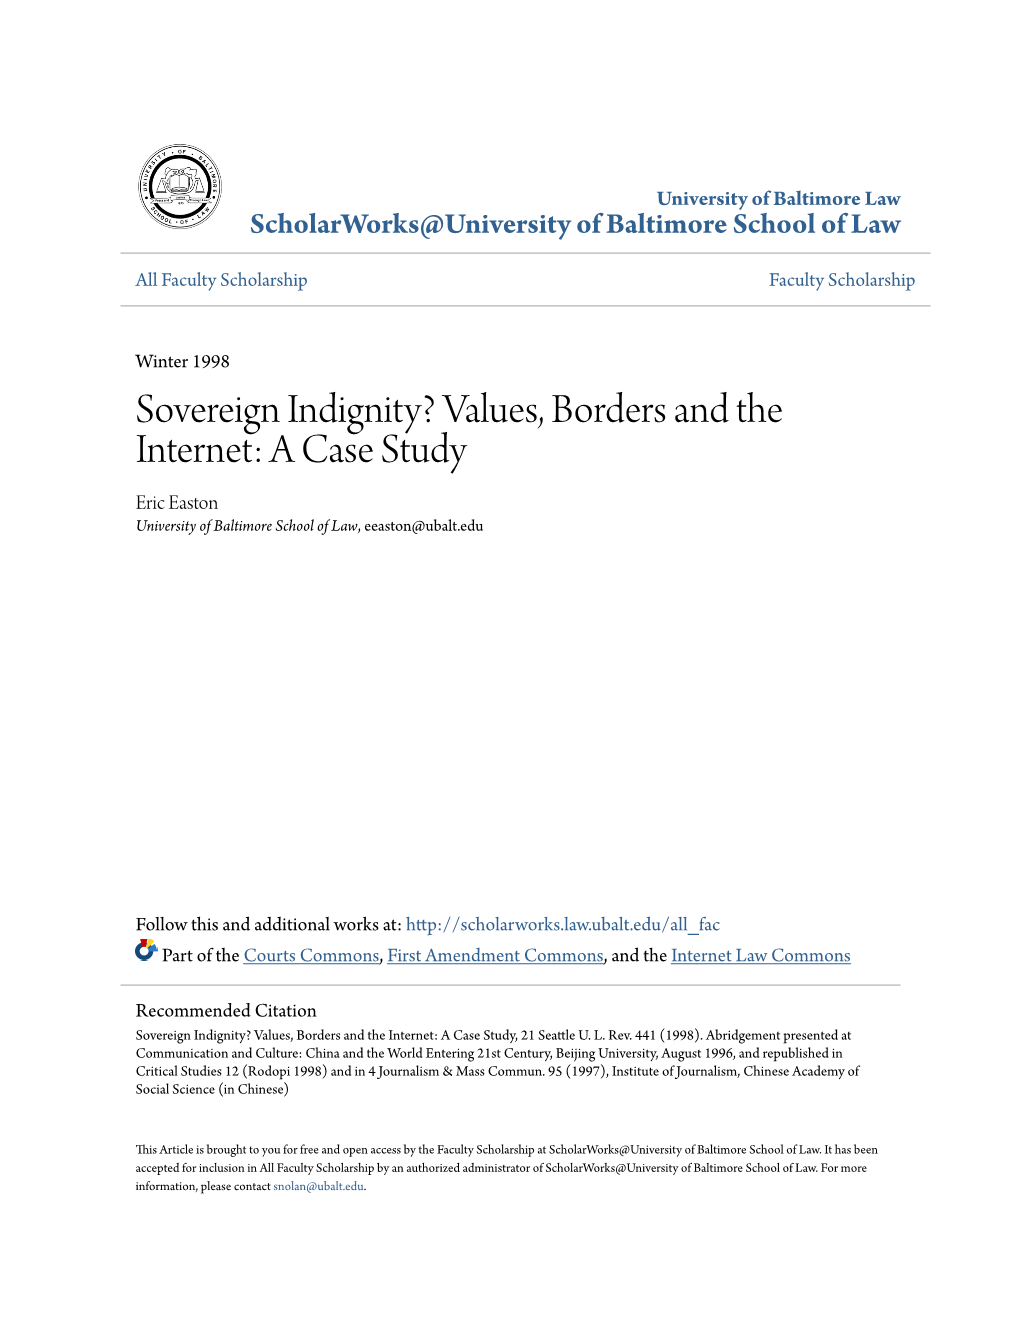 Values, Borders and the Internet: a Case Study Eric Easton University of Baltimore School of Law, Eeaston@Ubalt.Edu